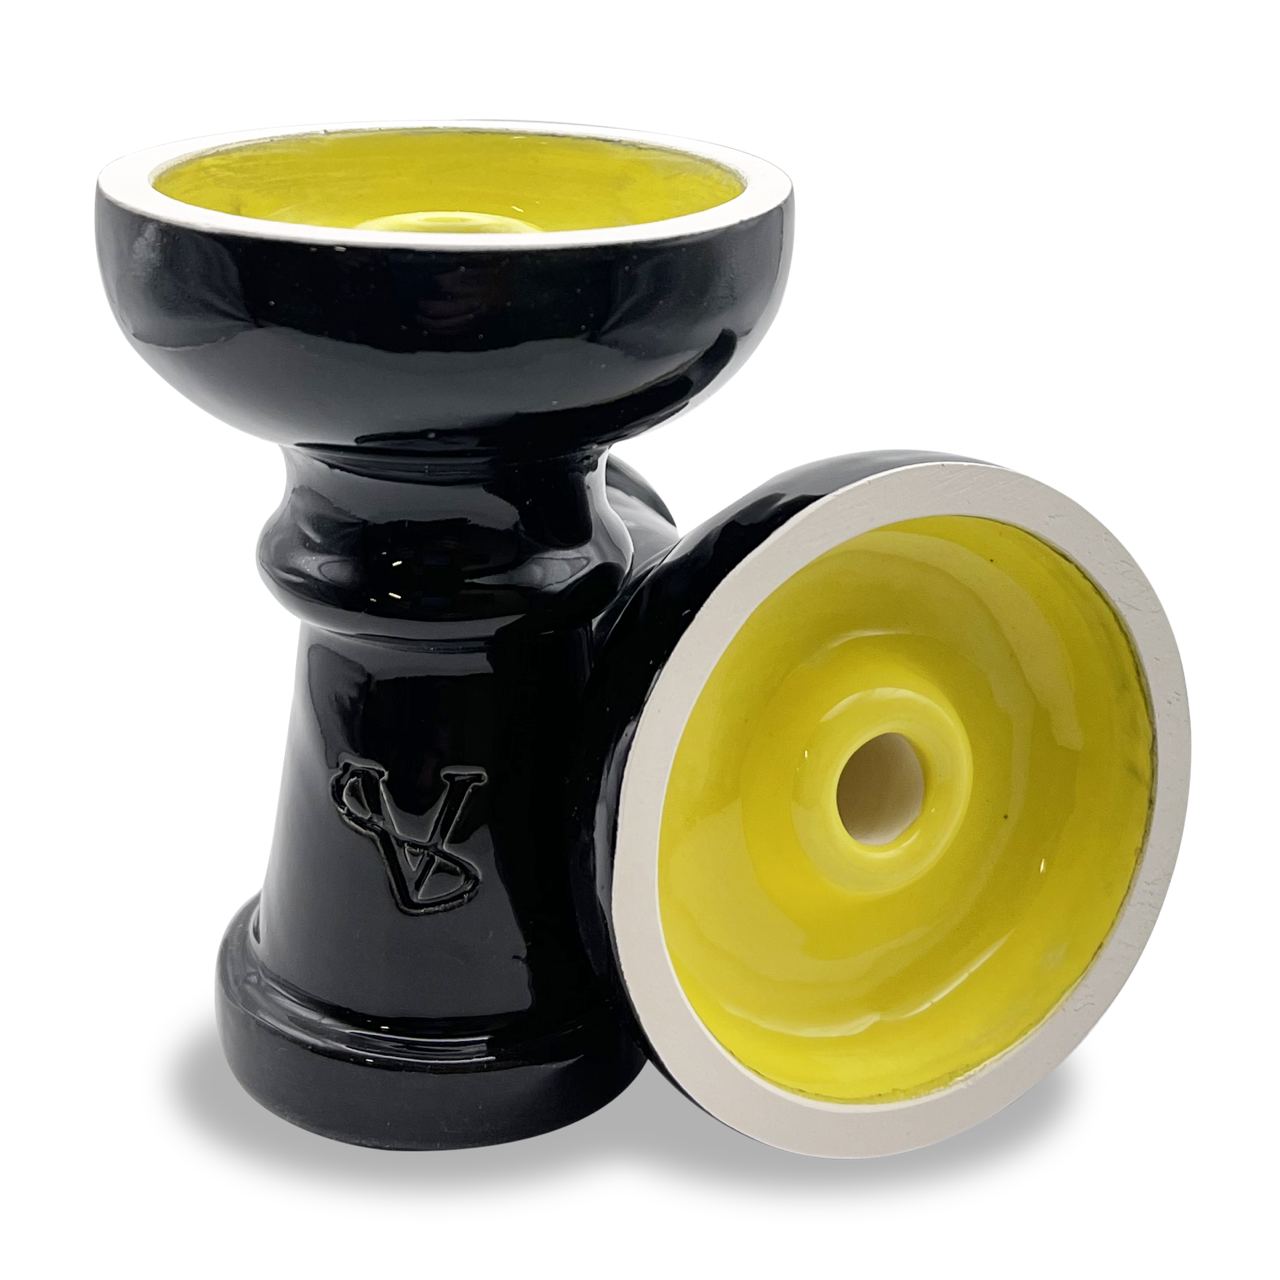 Savacco SV-25 Bowl - Black Yellow